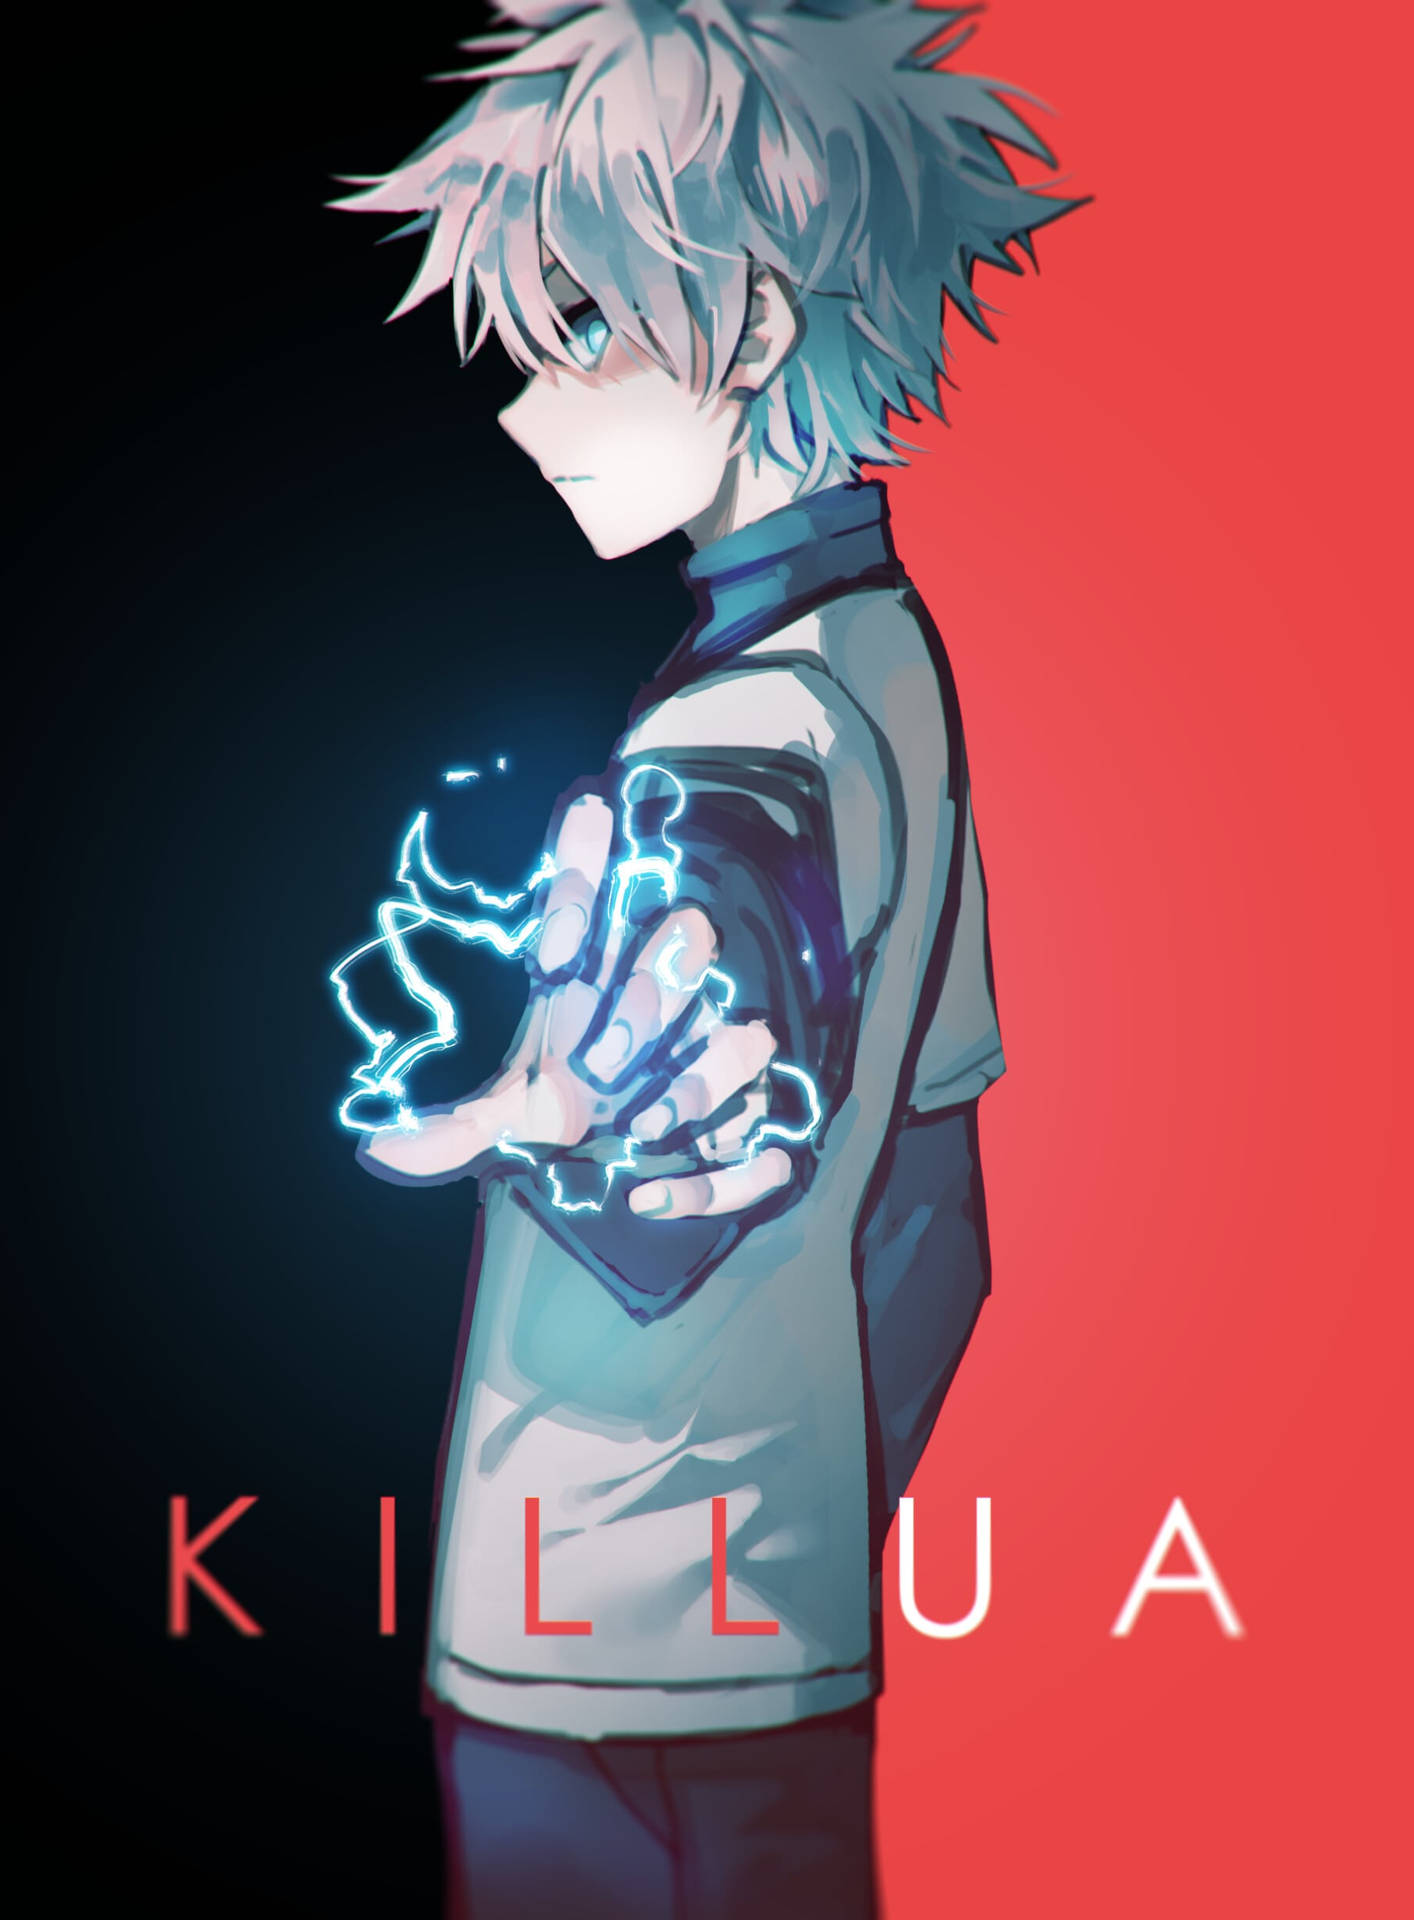 Cool Killua From The Anime Series Hunter X Hunter Background